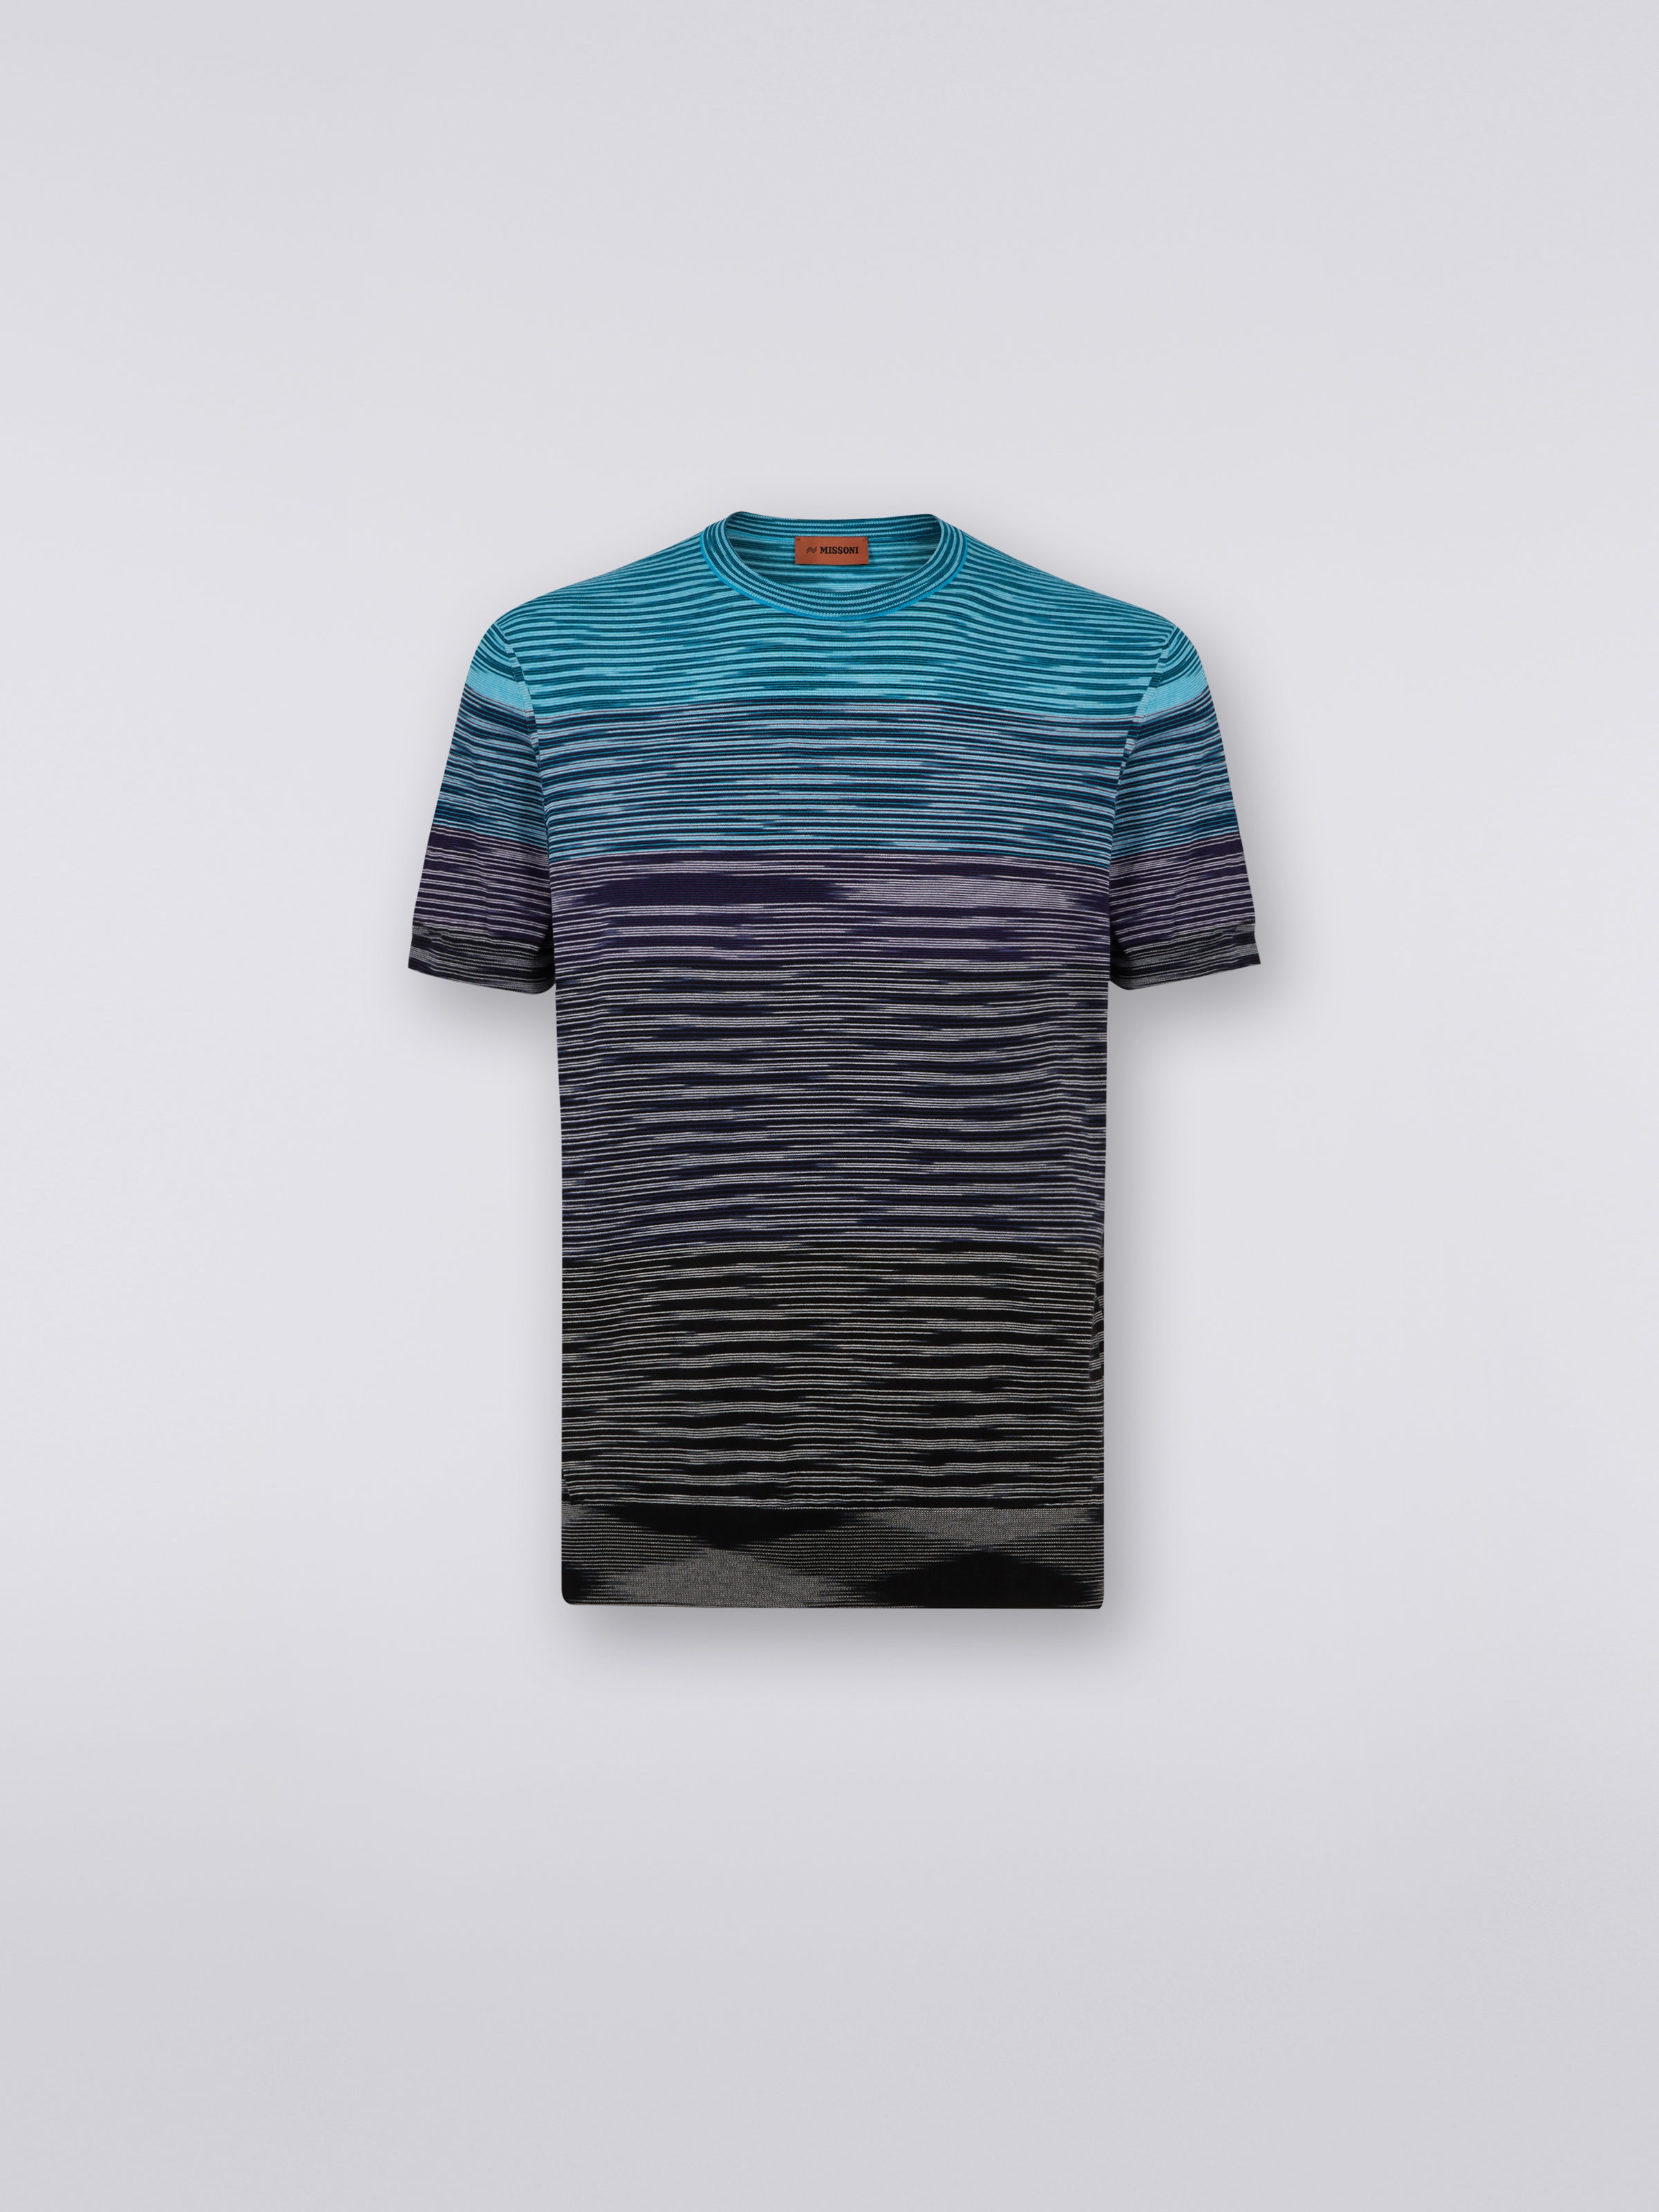 Short-sleeved crew-neck T-shirt in cotton knit with dégradé stripes, Blue, Purple & Black - 0